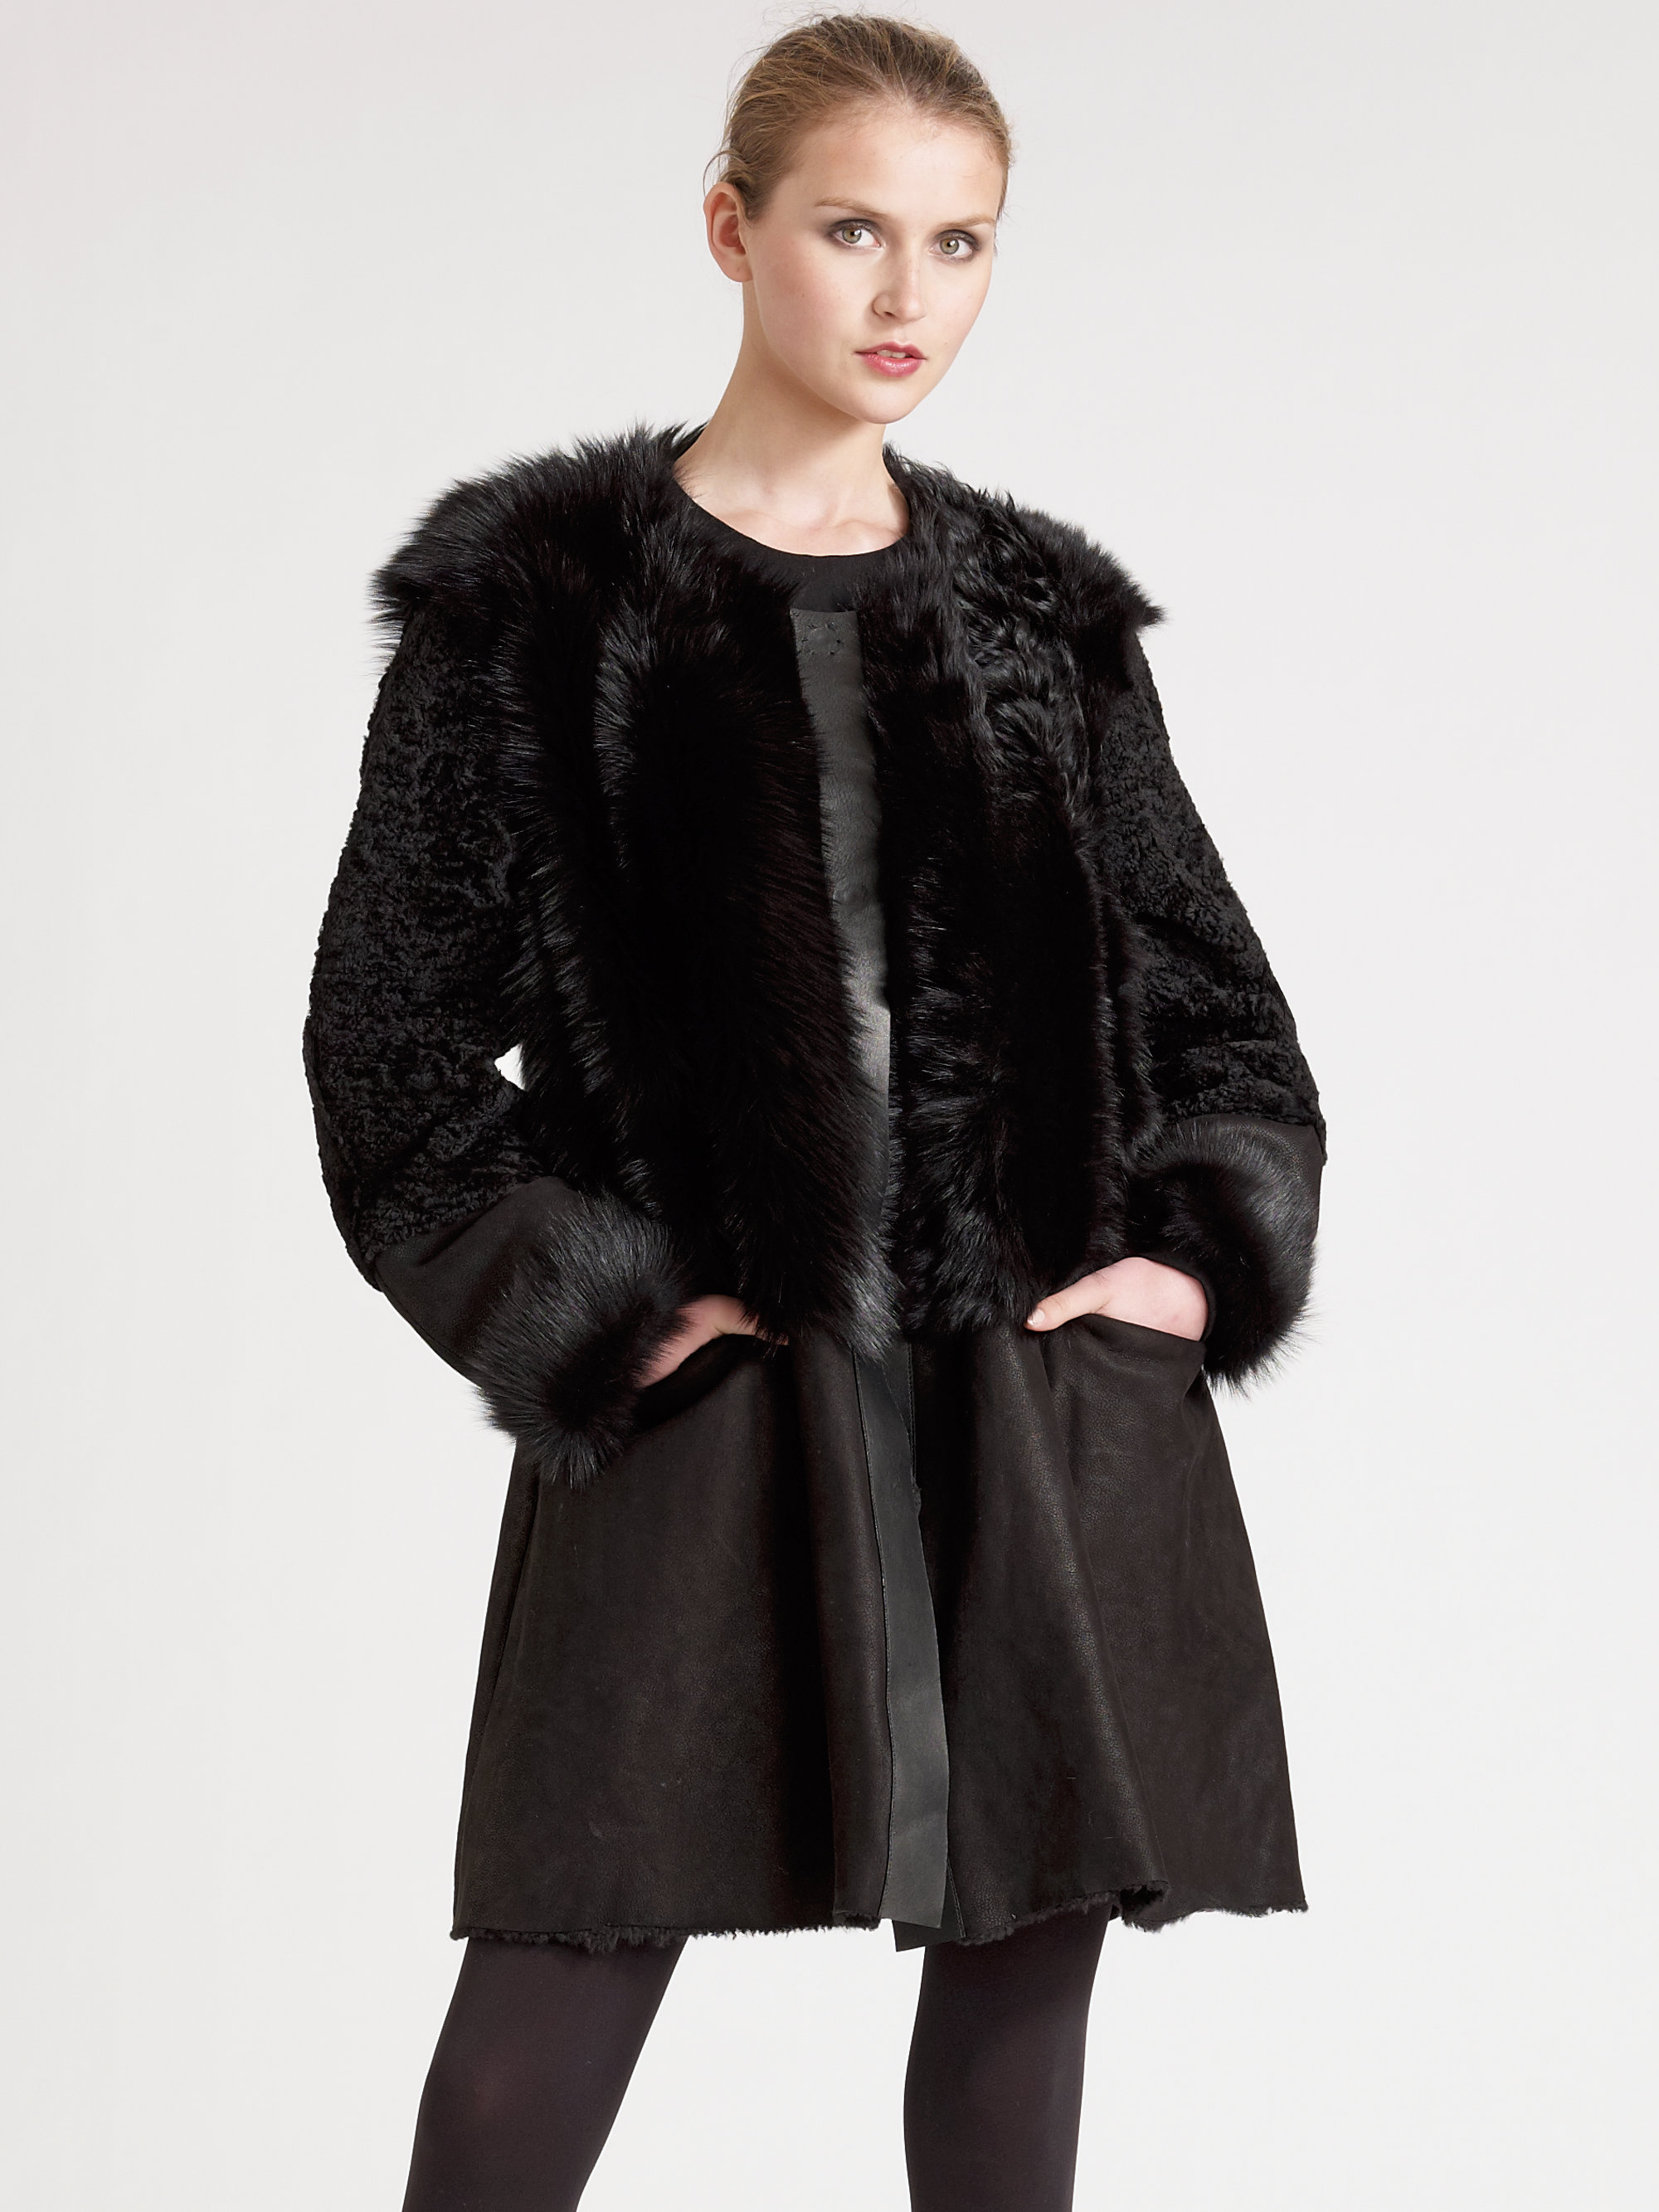 Donna karan Lamb Shearling Coat in Black | Lyst